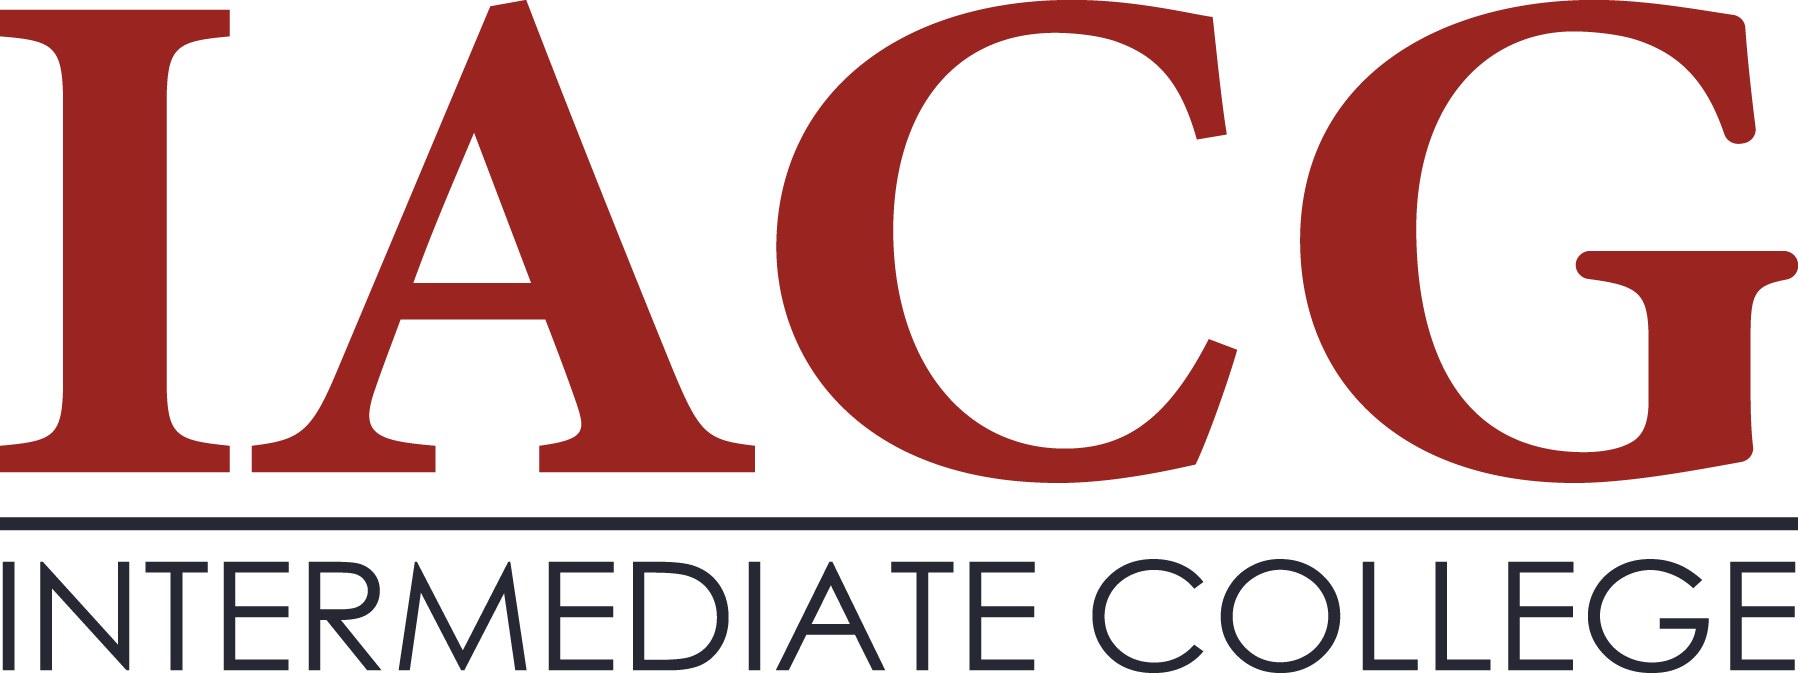 Iacg intermediate college logo